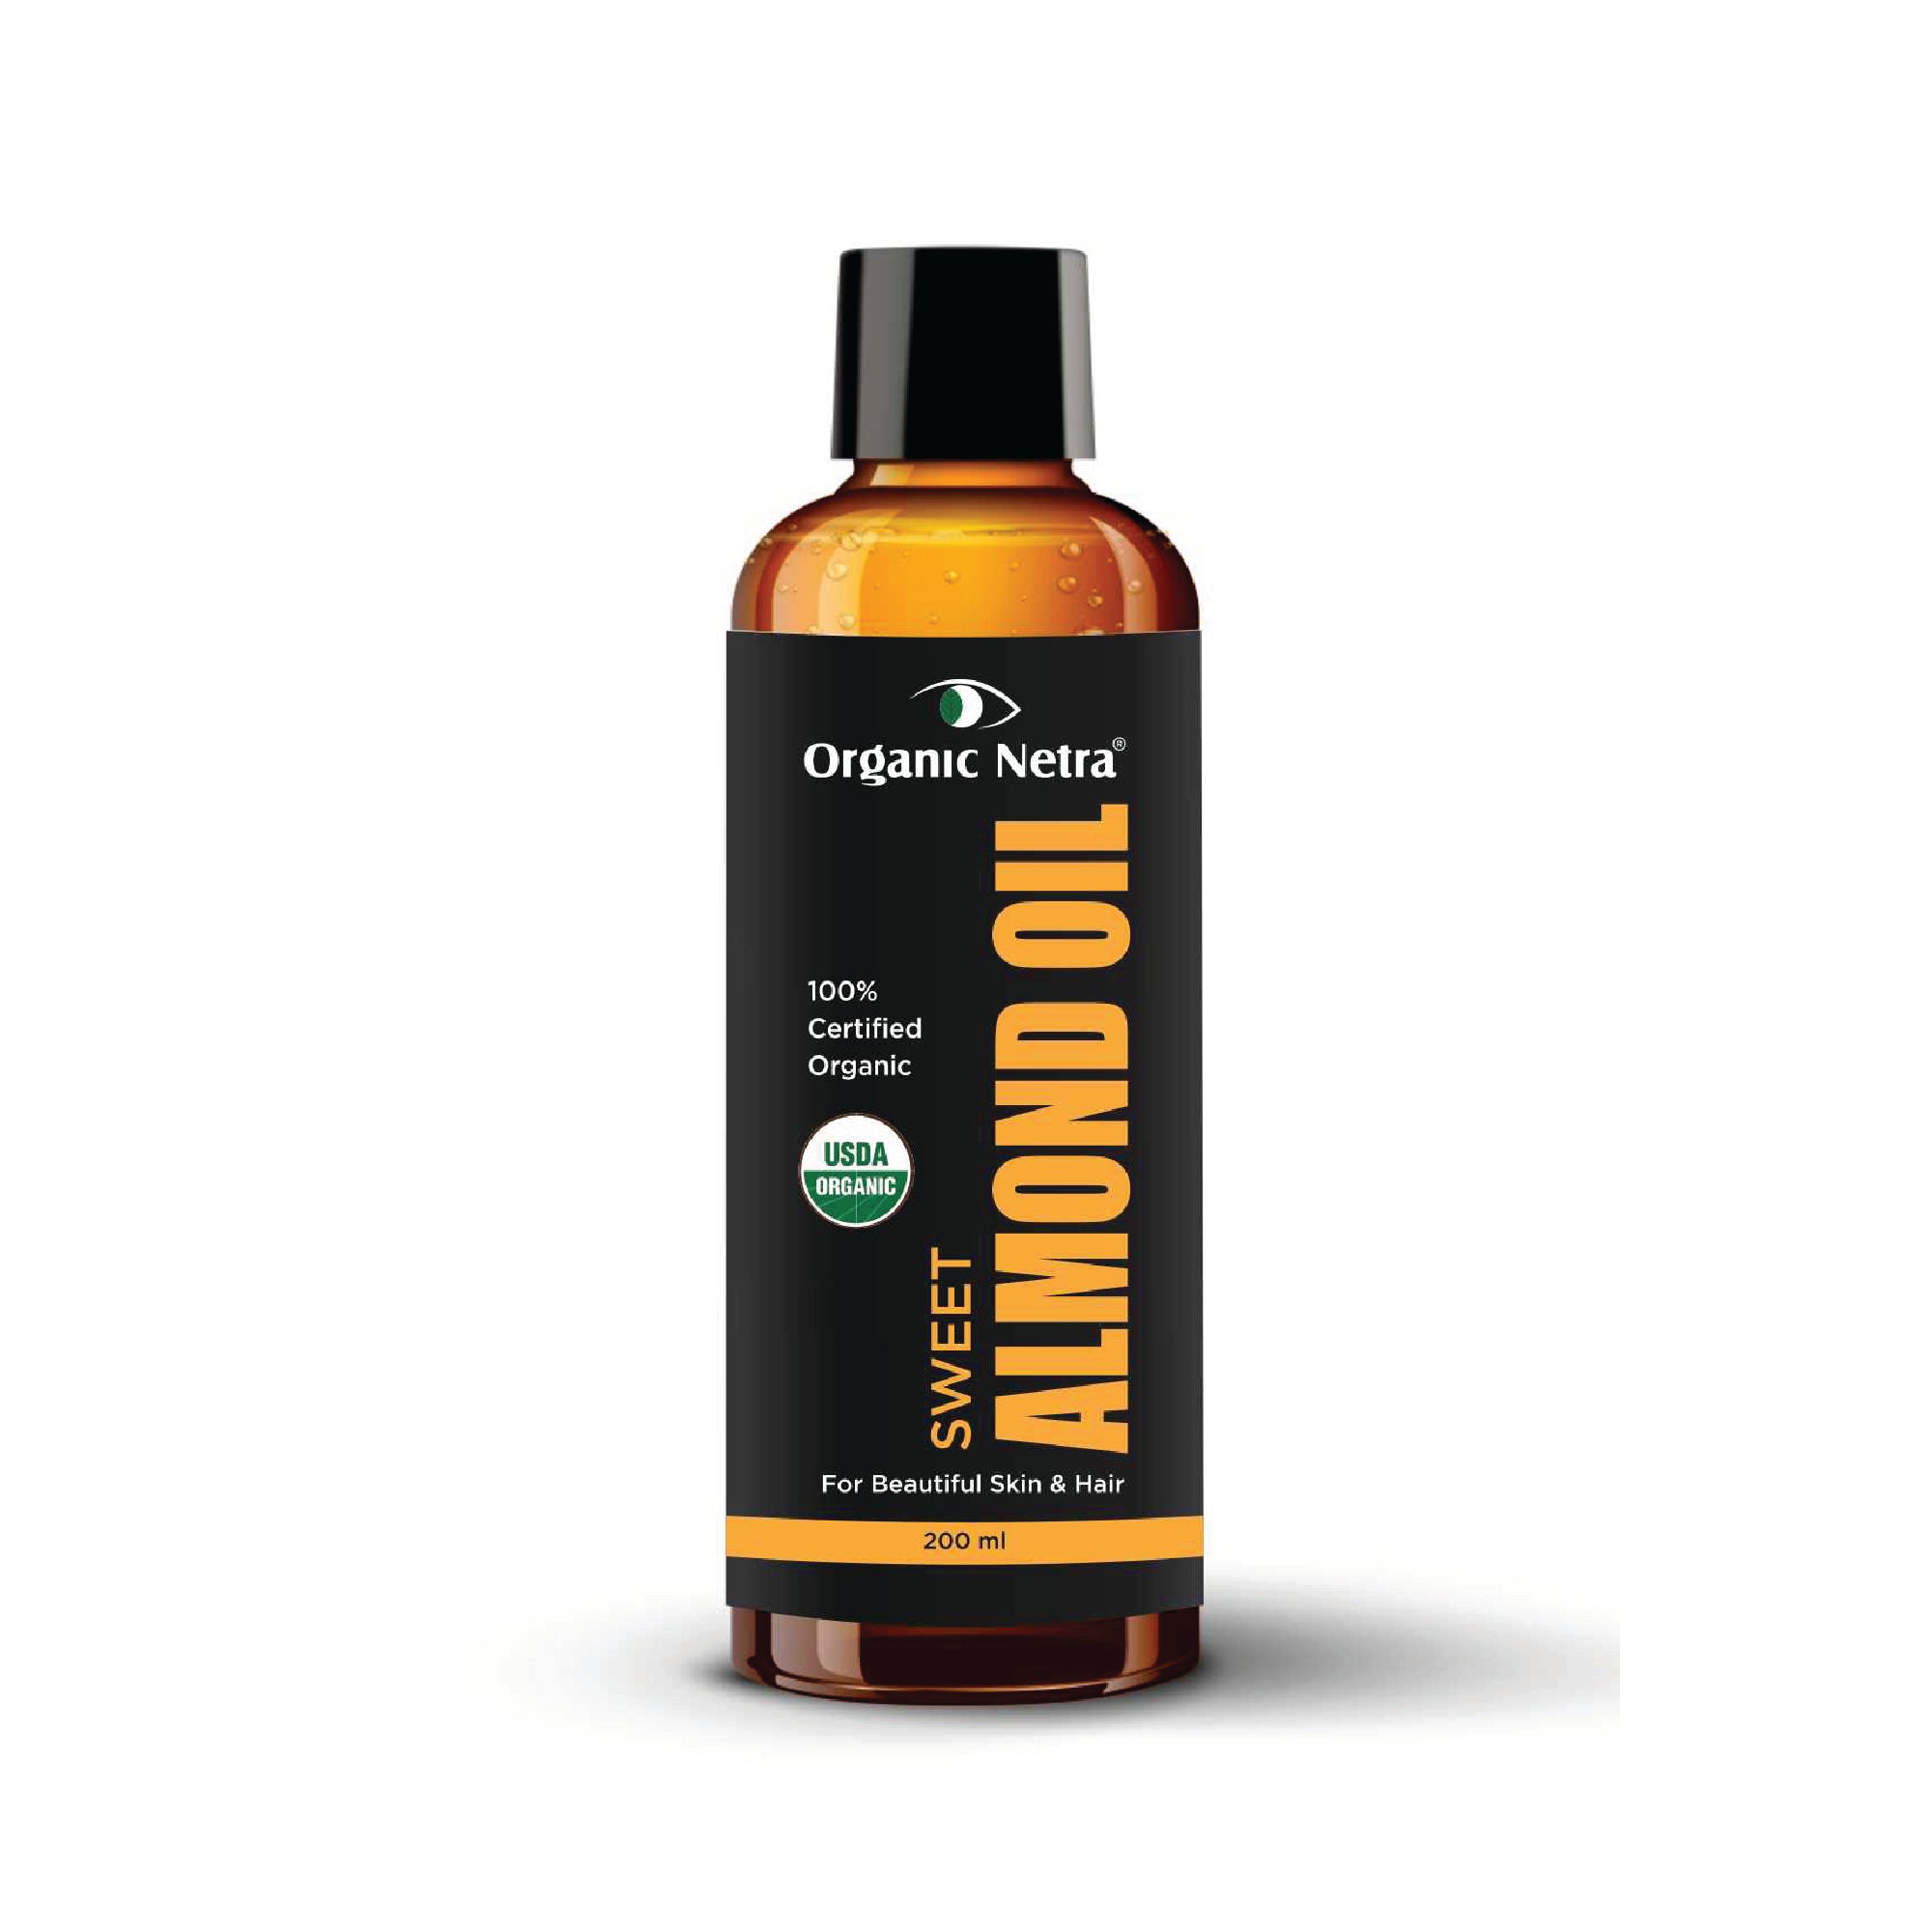 Cold Pressed Castor Oil  Almond Oil combo for Hair Skin Nail  Shudh  Online